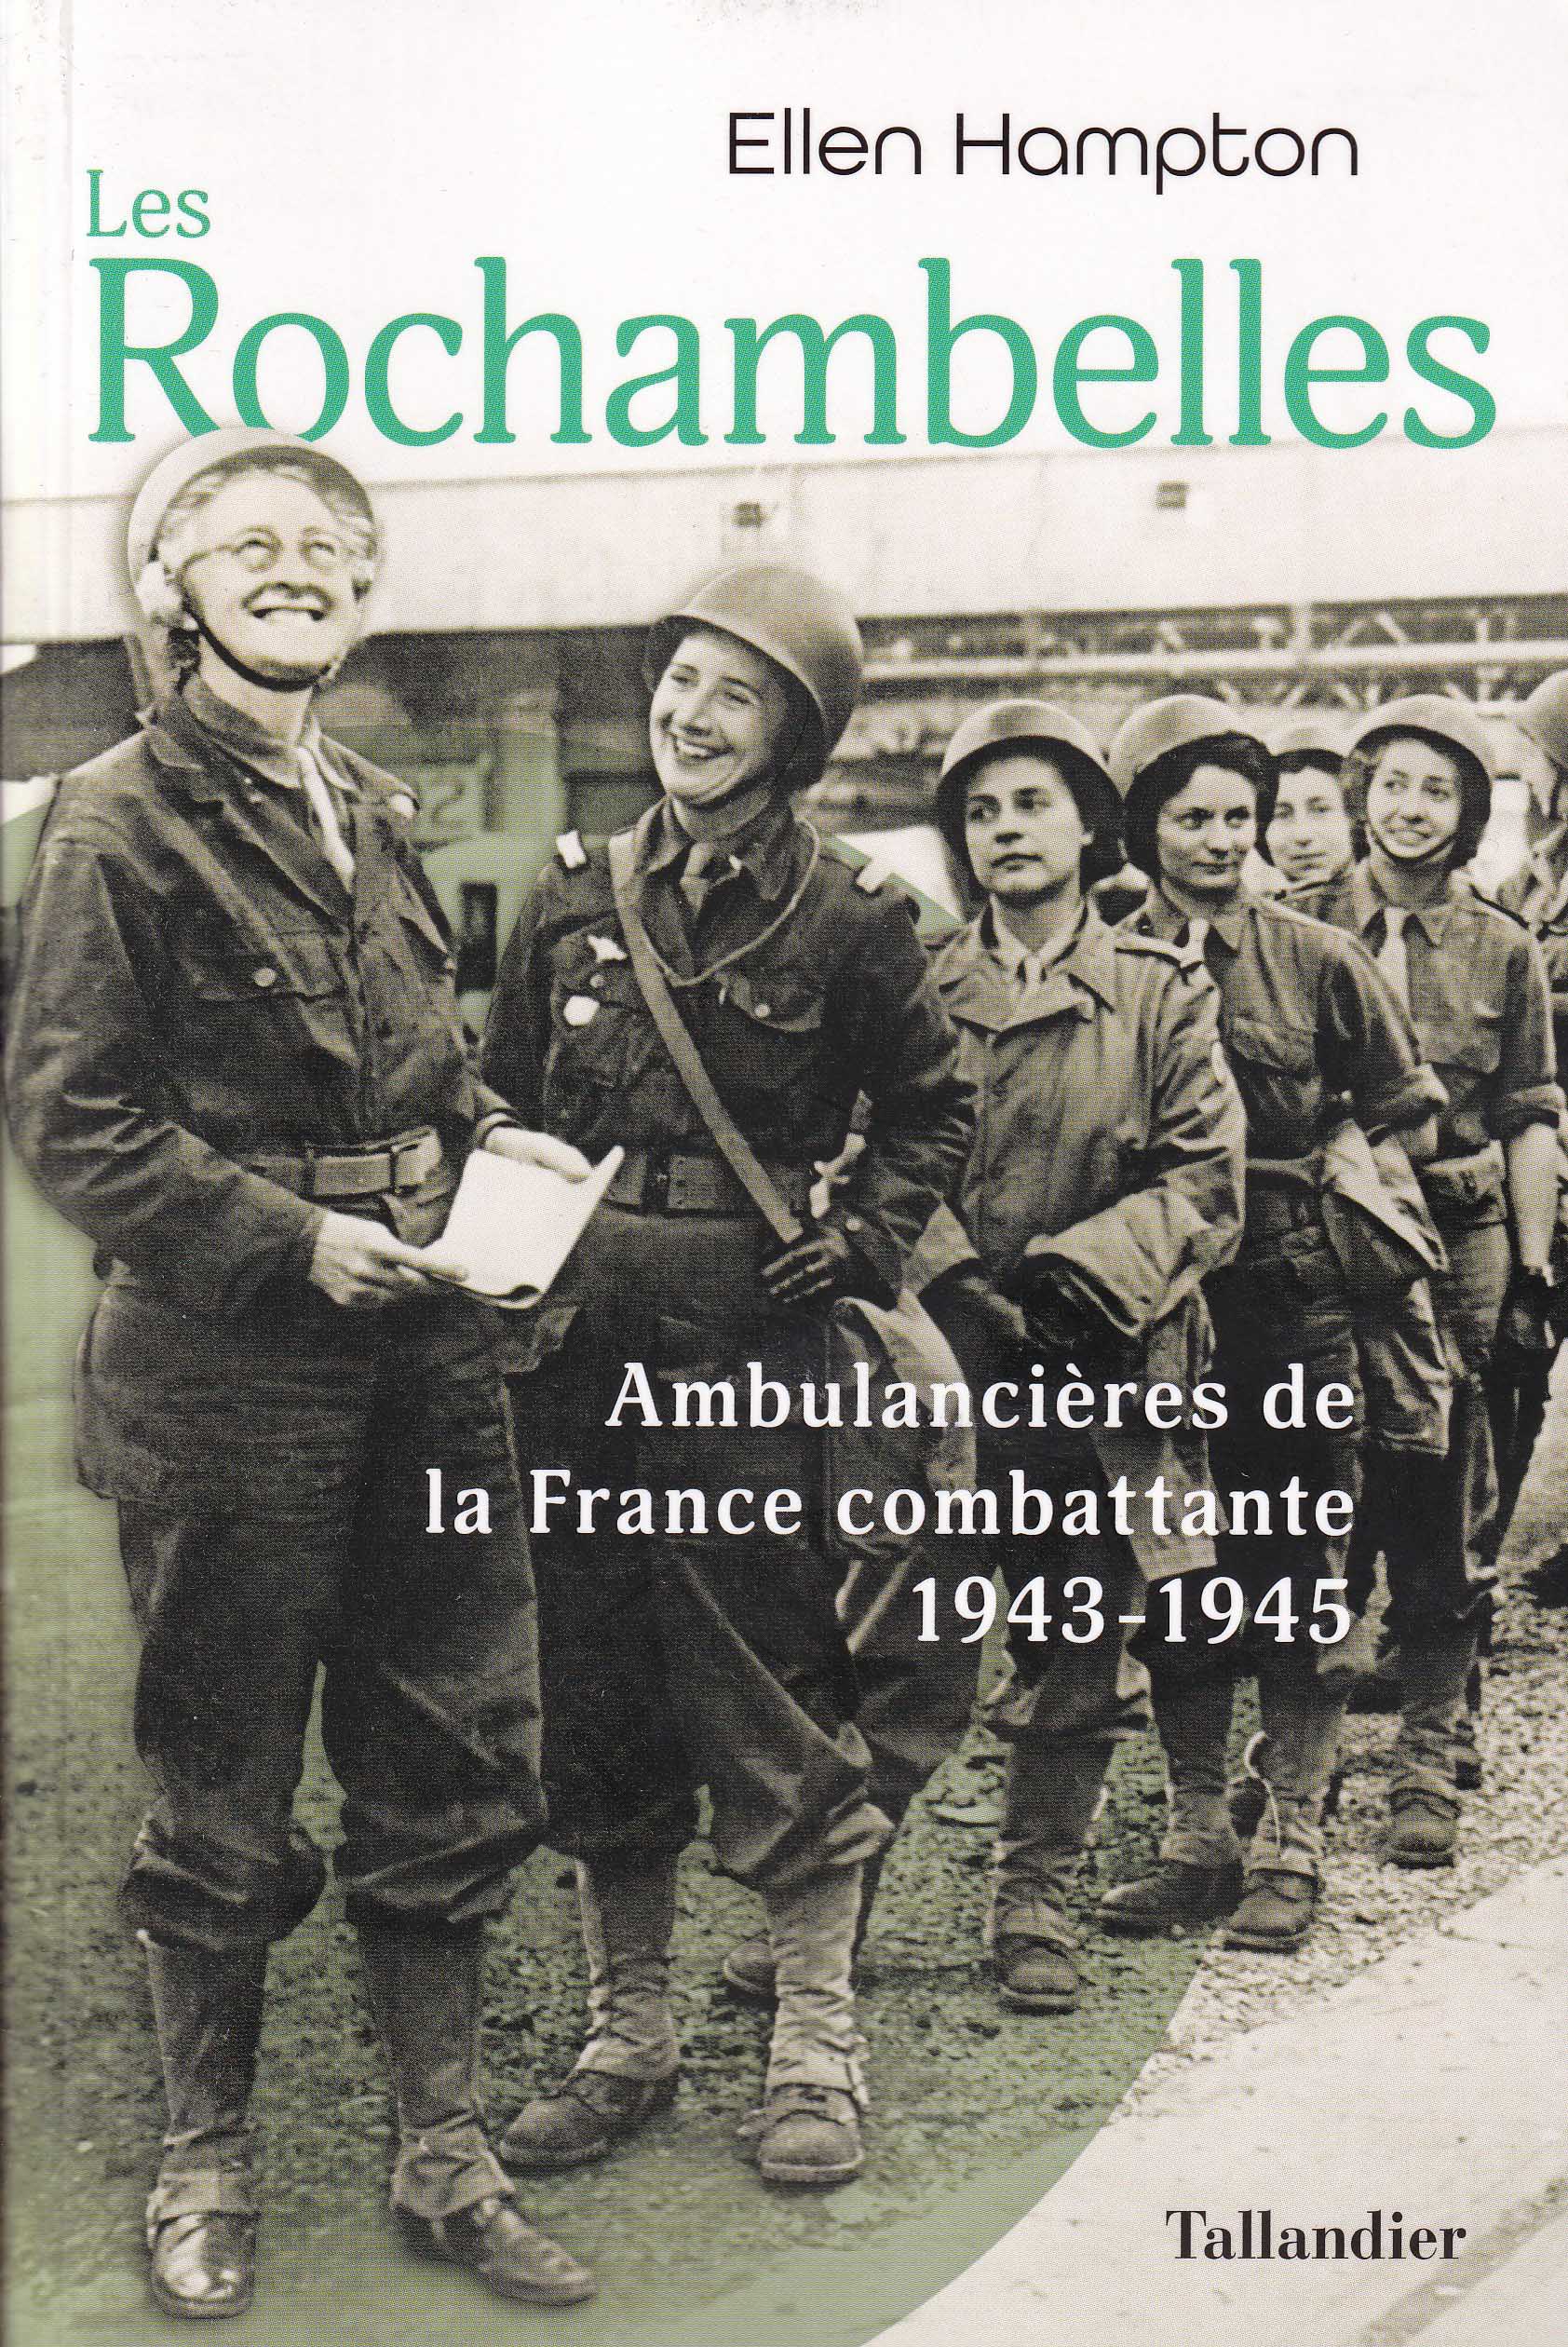 Les Rochambelles, ambulancières de la France combattante 1943-1945